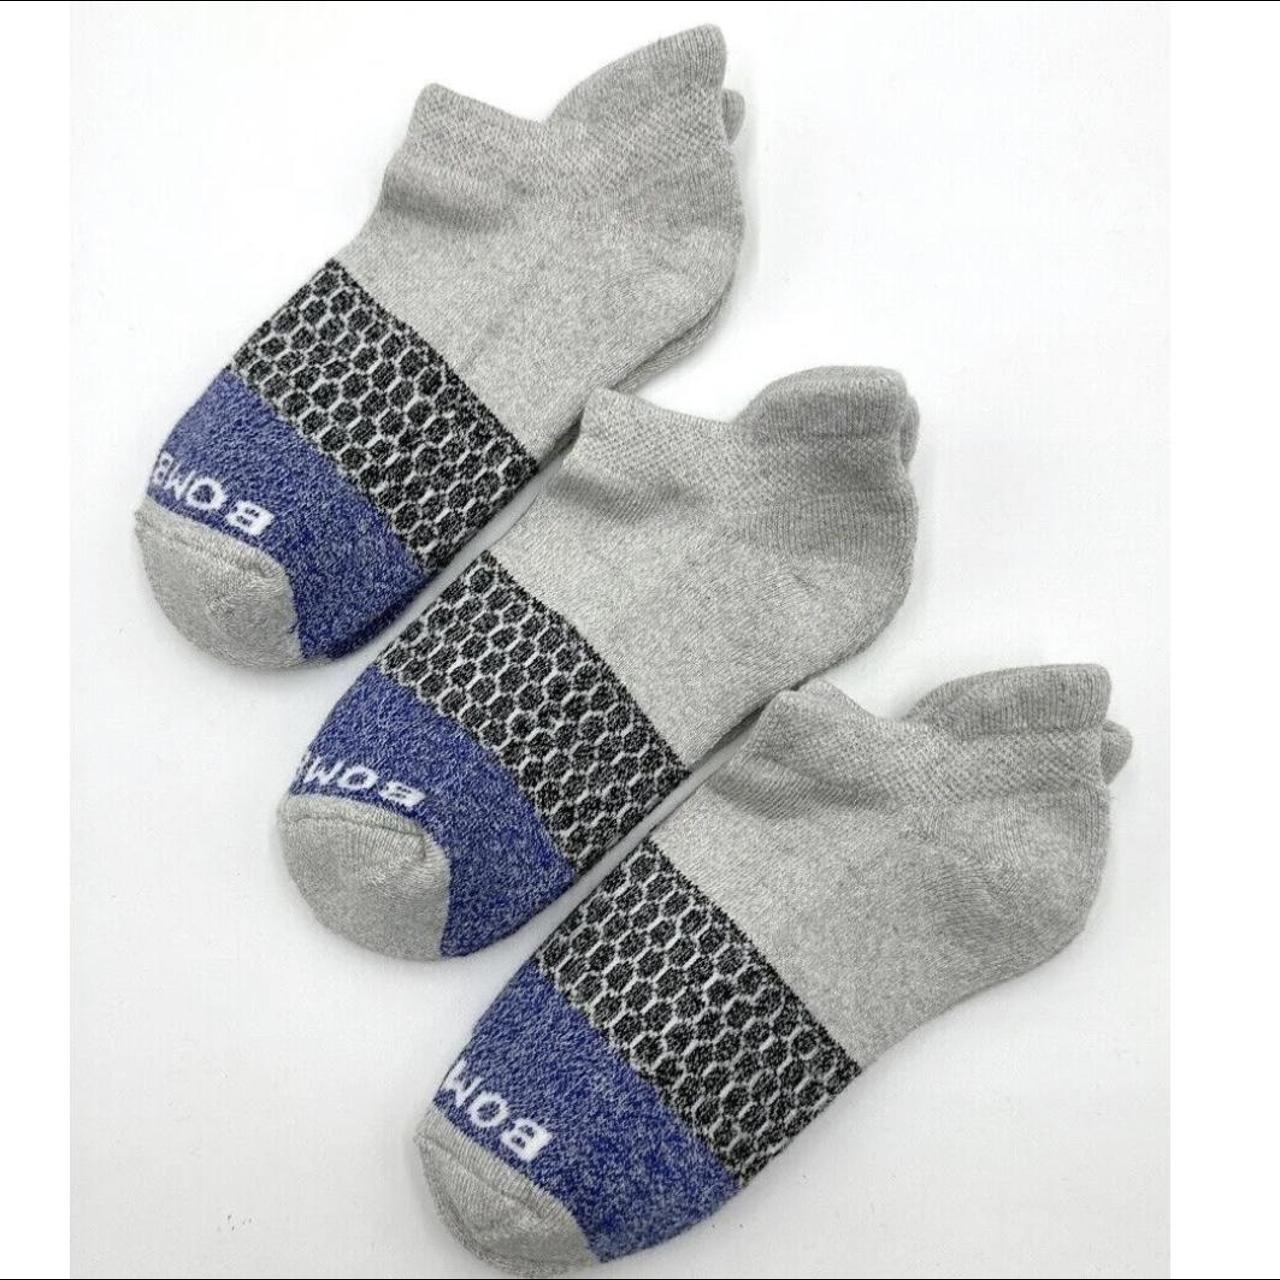 Bombas Men's Grey and Blue Socks